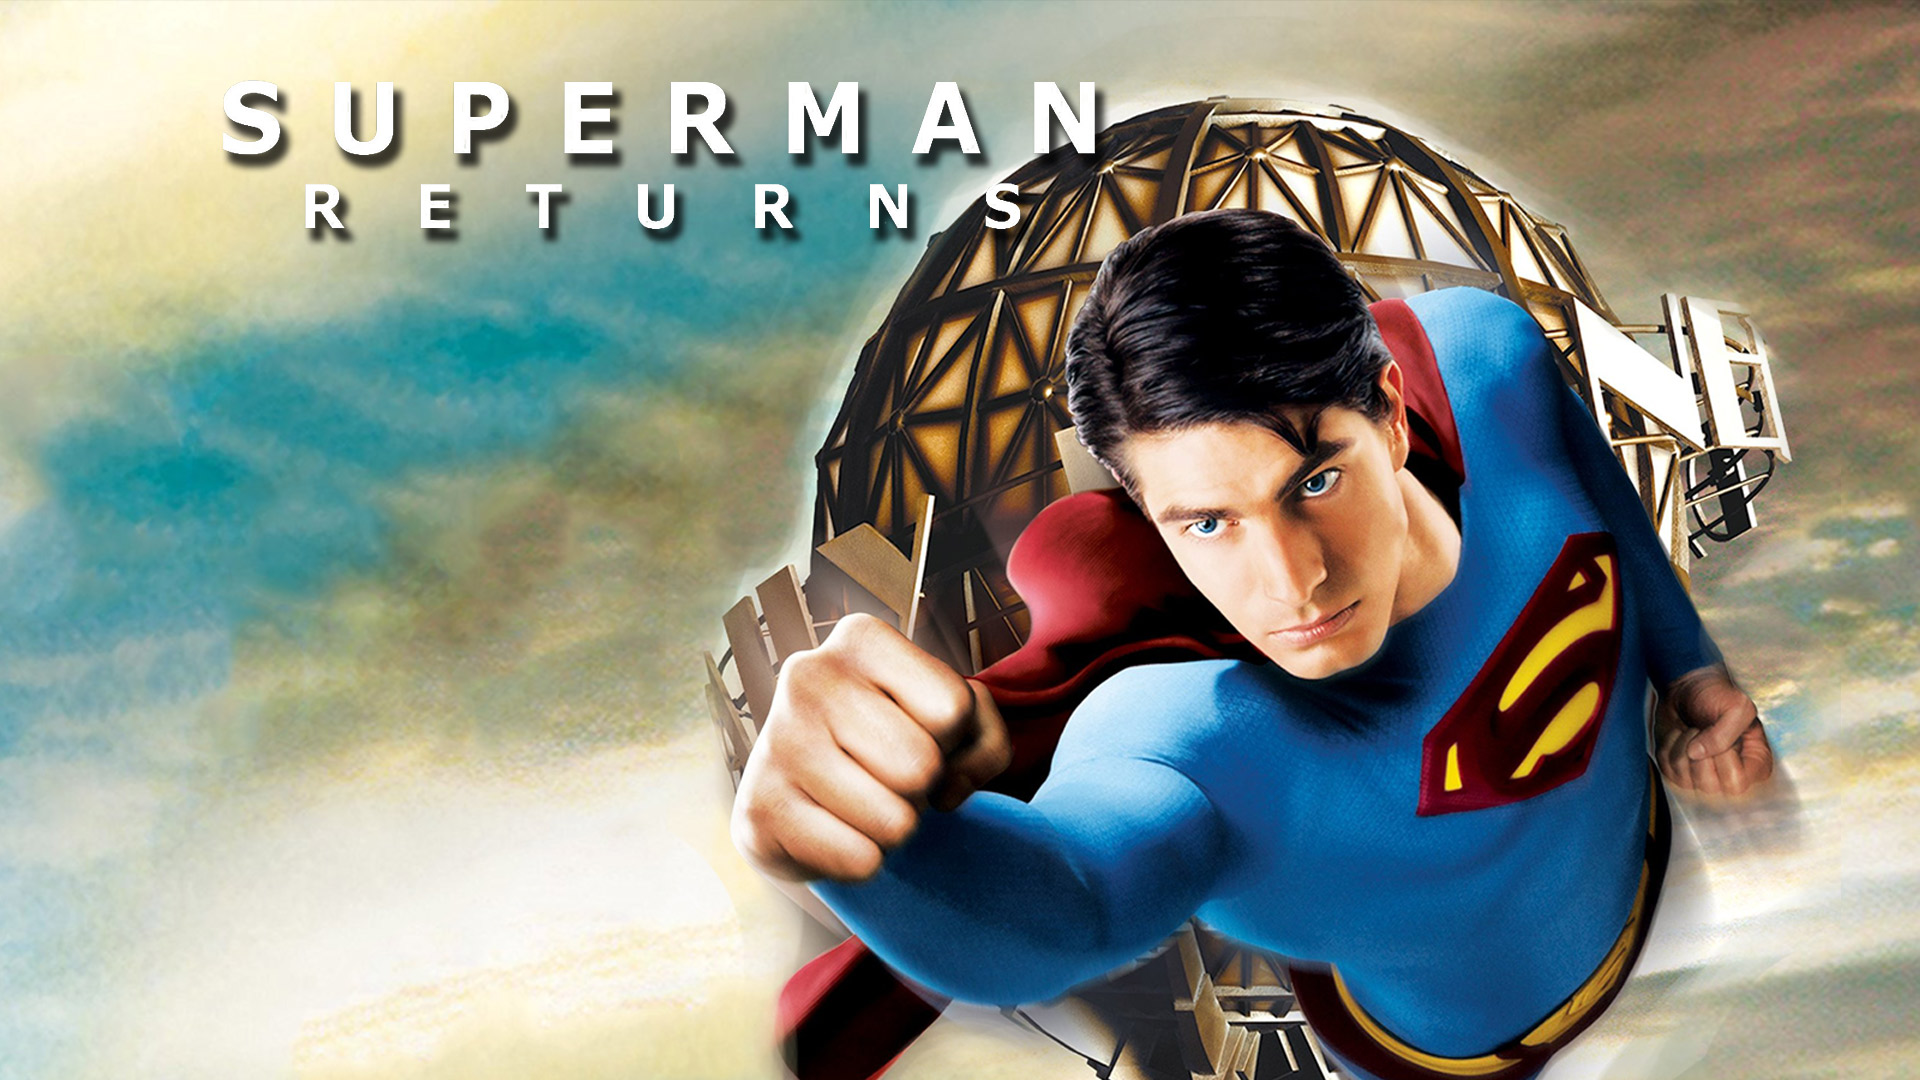 Super return. Супермен 2006. Супермен 2: режиссерская версия (2006). Superman Returns 2006. Супермен 2 Постер.